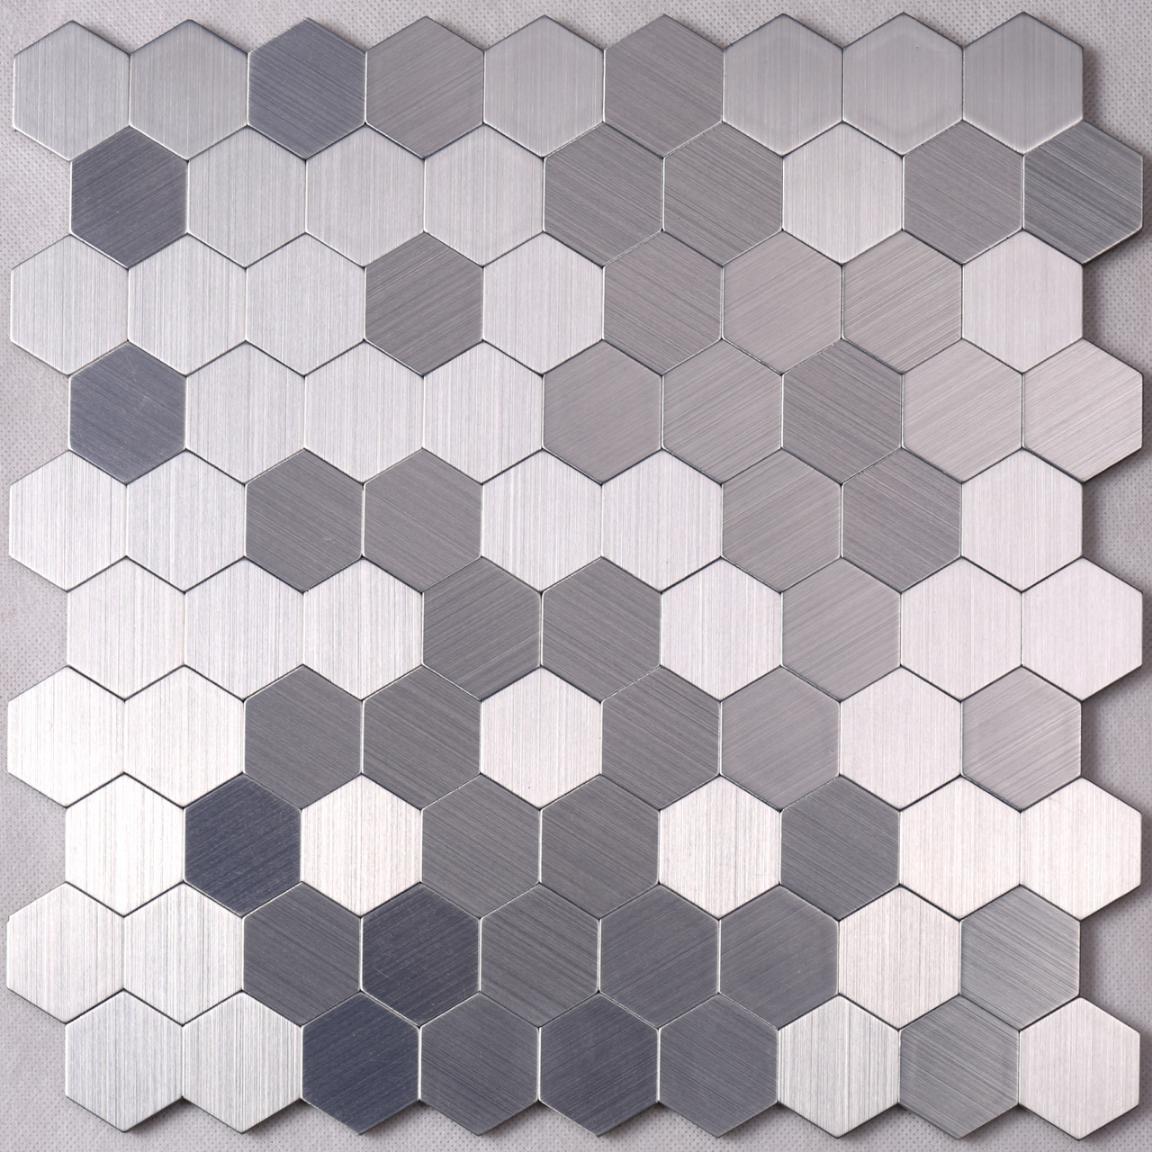 2x2 metal tile backsplash from China for kitchen-1